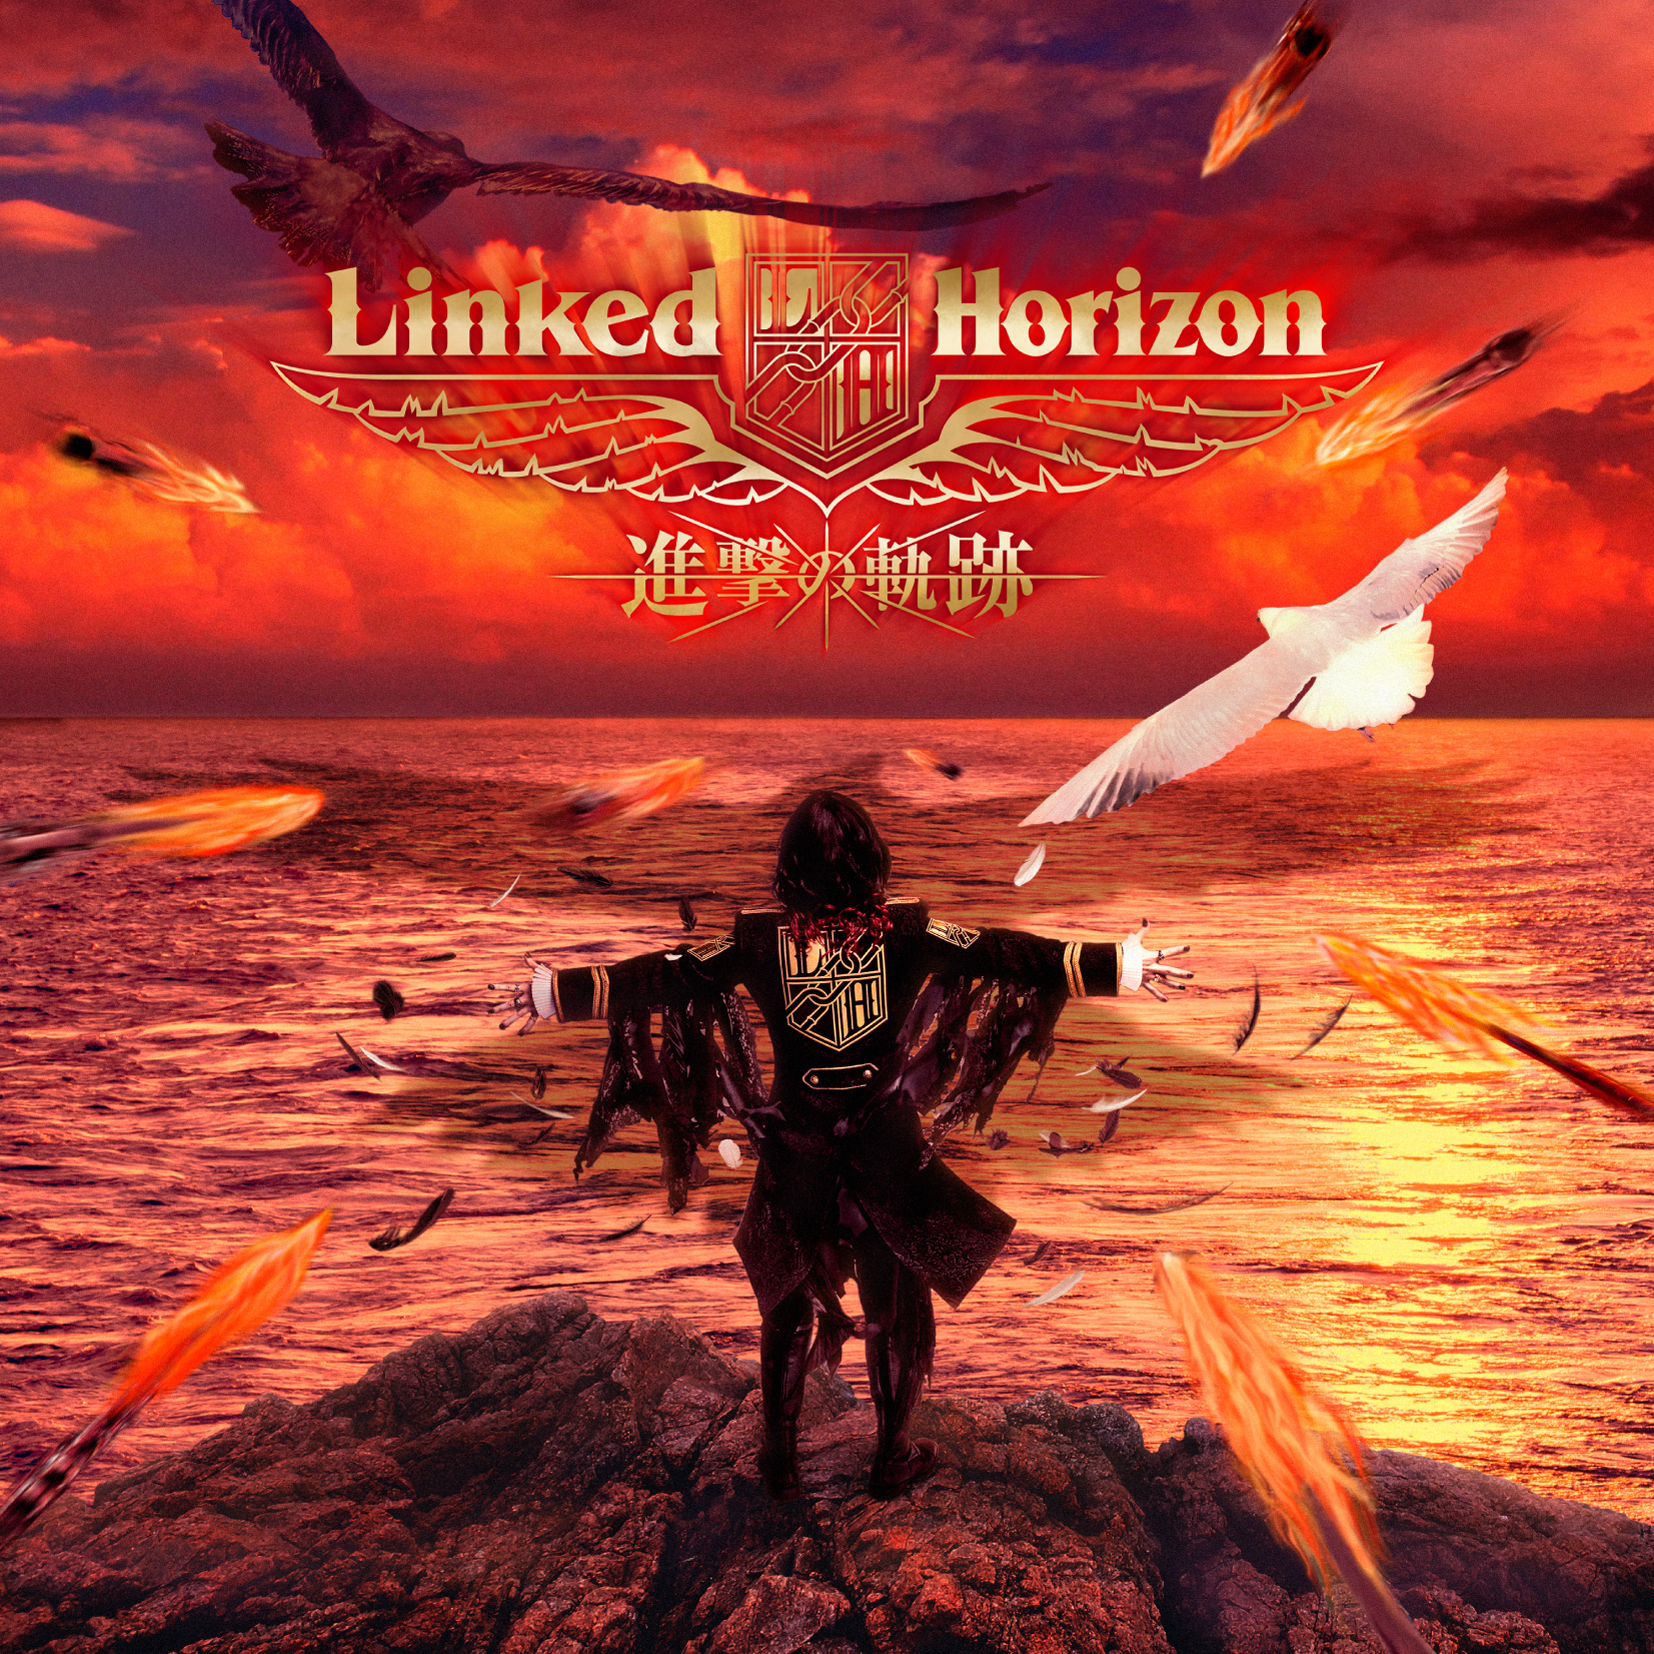 Attack On Titan (Shingeki no Kyojin) | Collection | DVD | Dual Audio